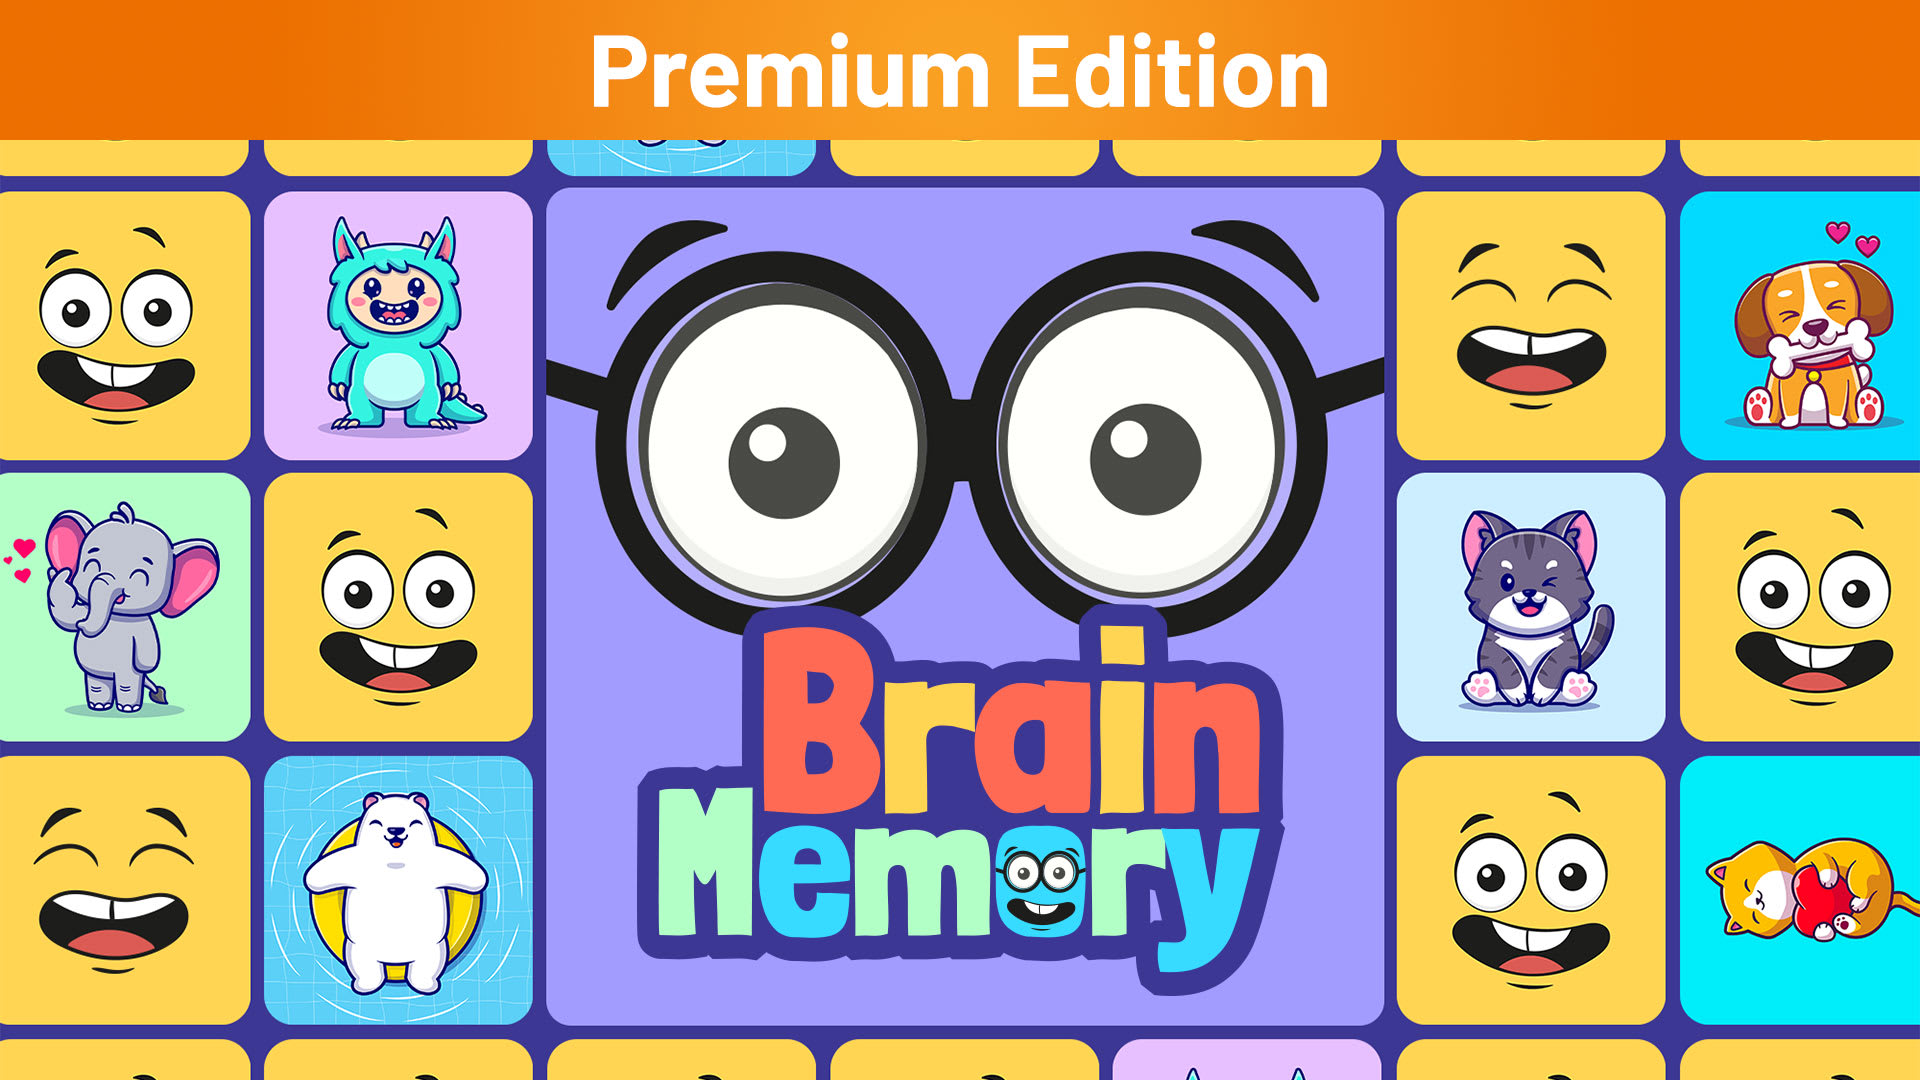 Brain Memory Premium Edition